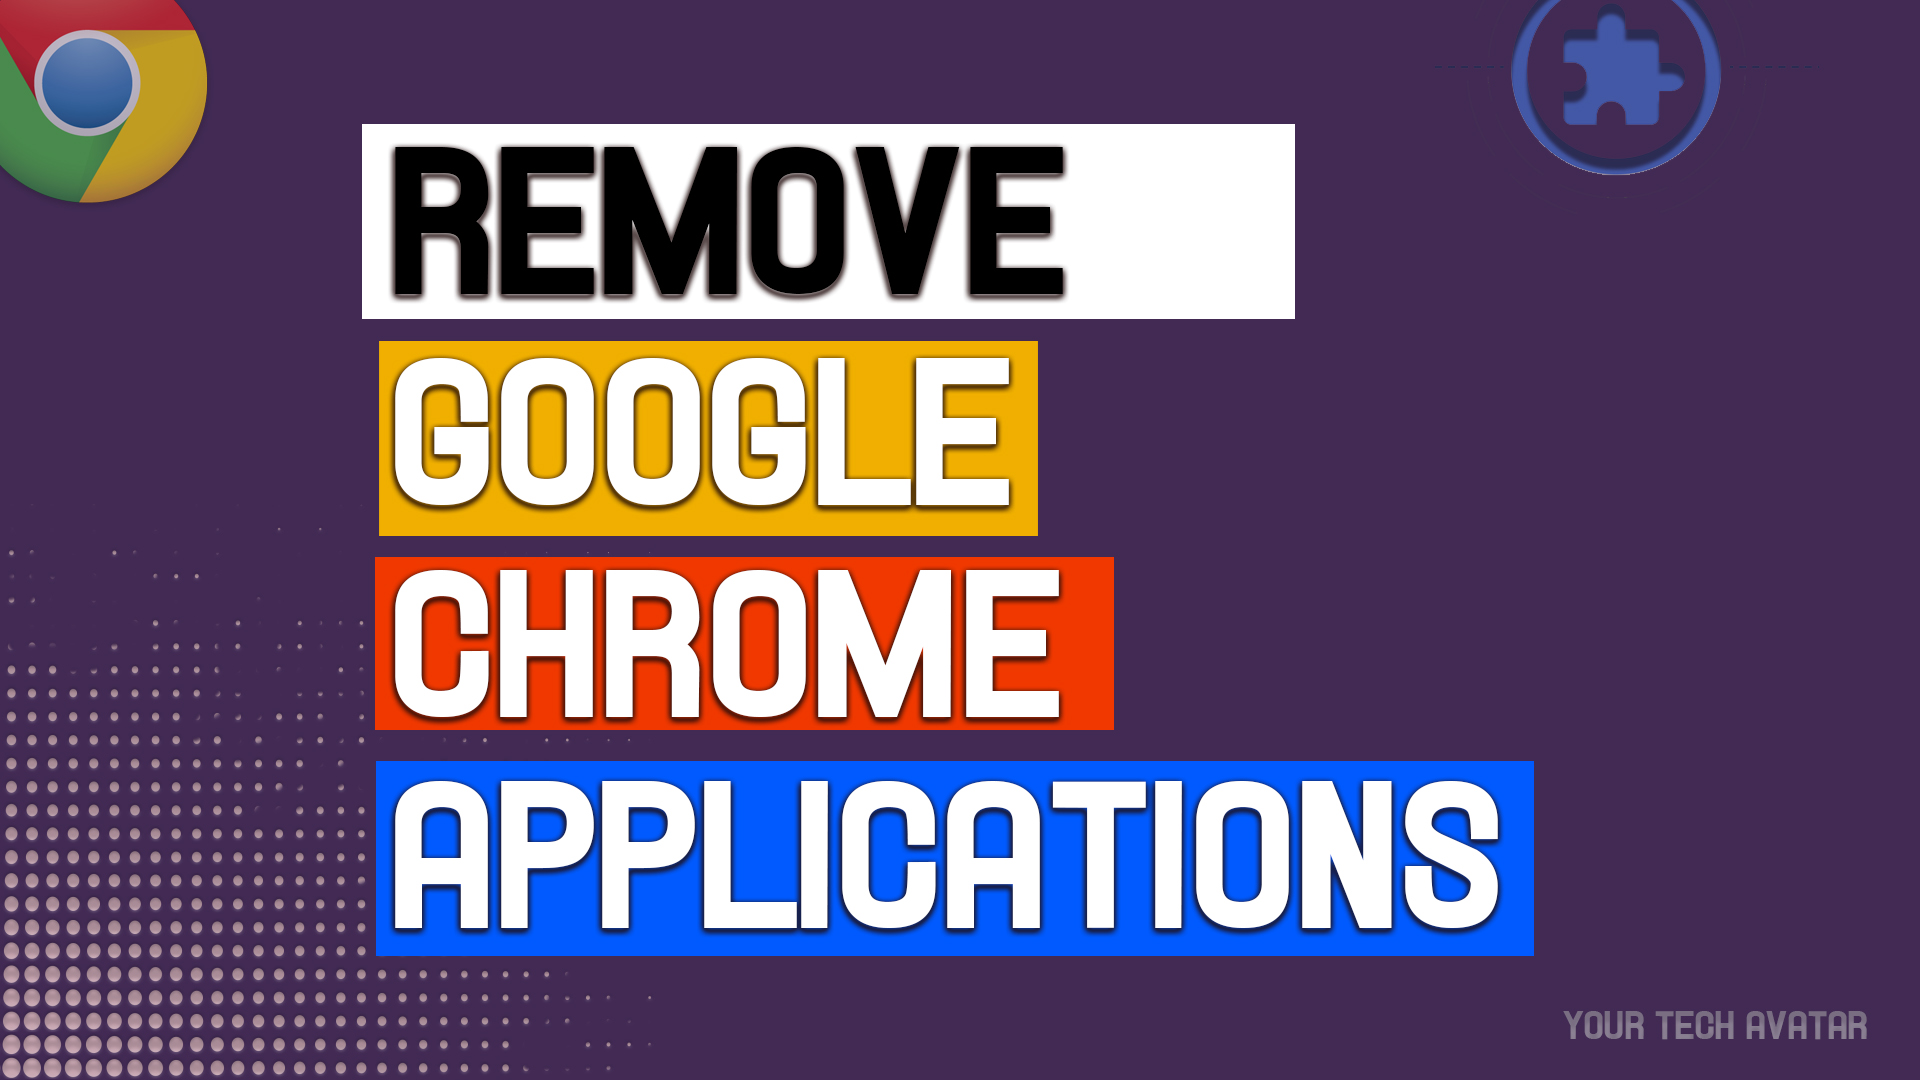 Remove google chrome apps